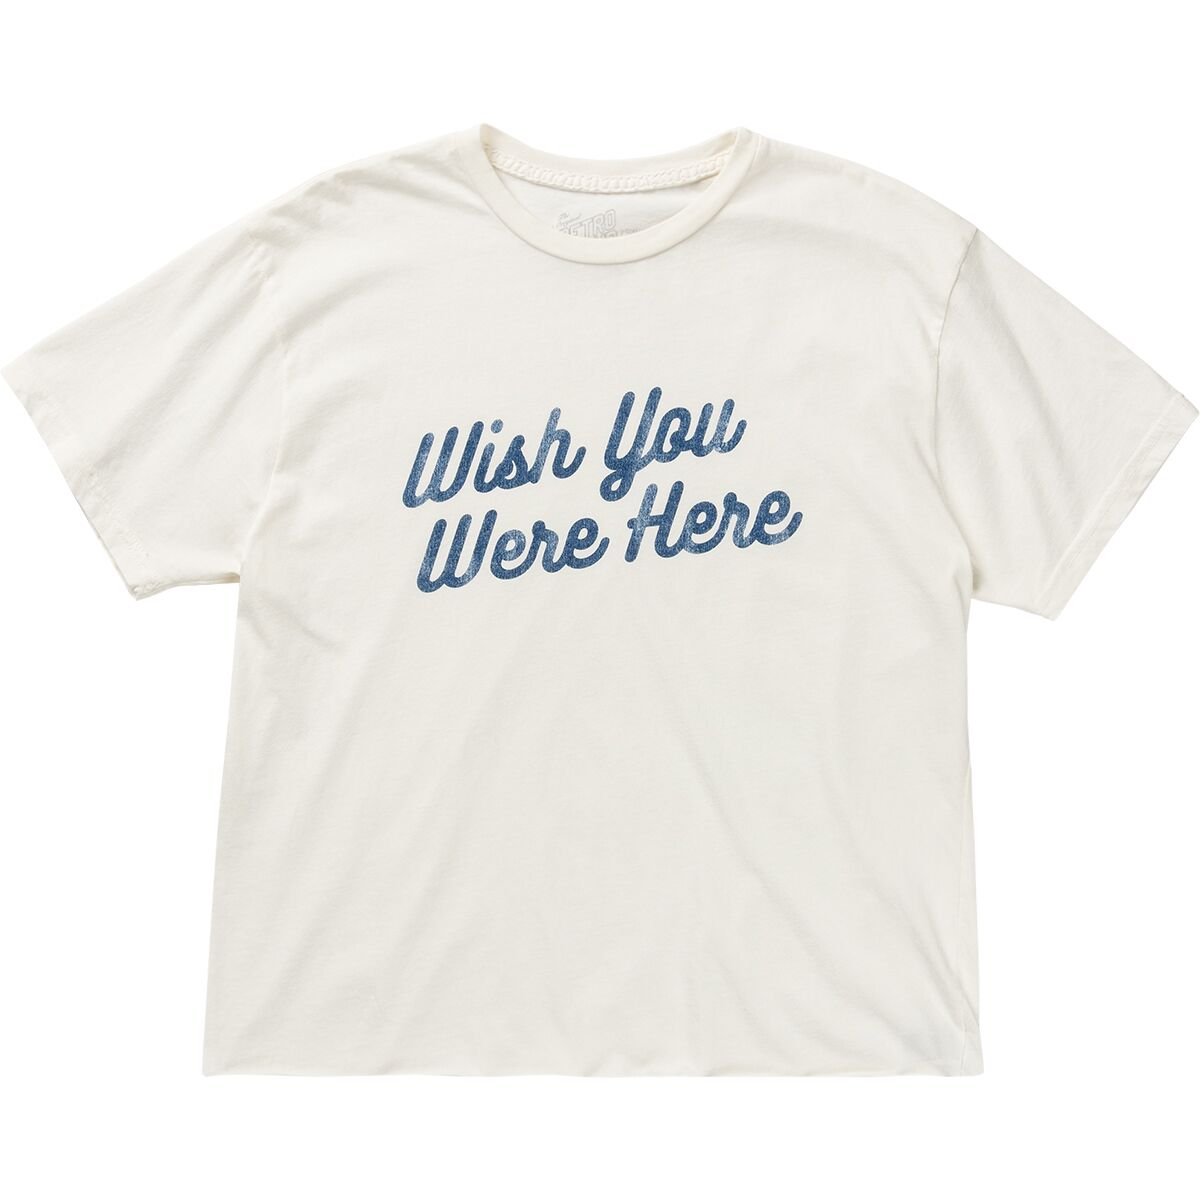 Original Retro Brand Wish You Were Here Shirt - Women's